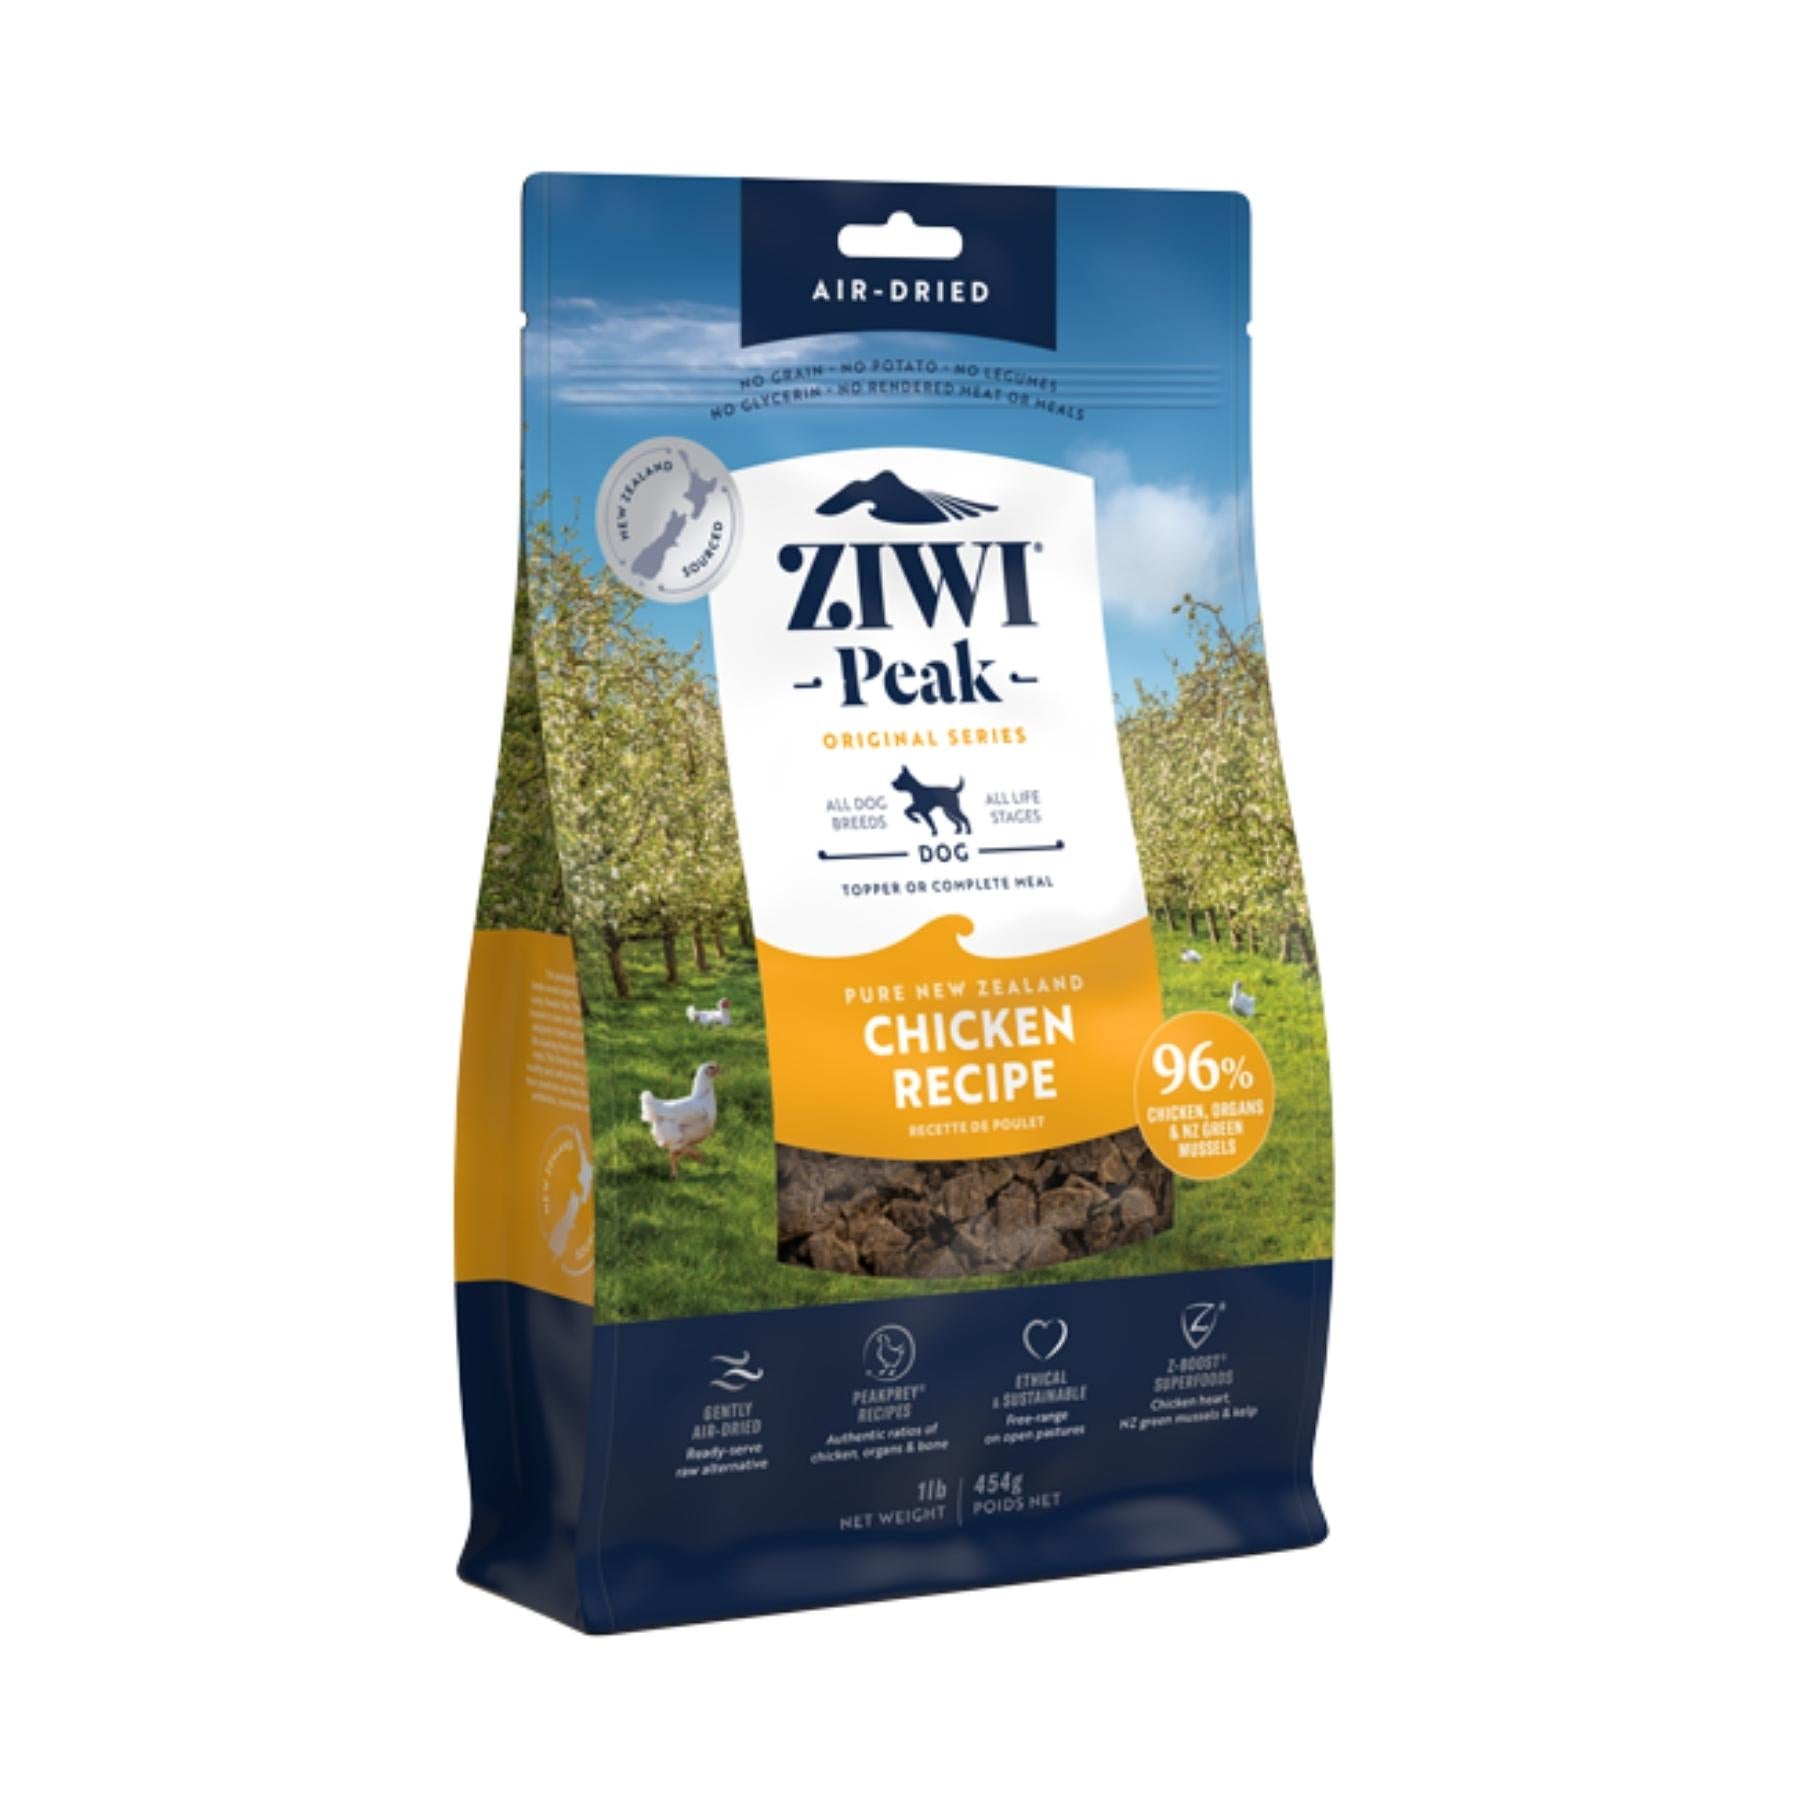 ZIWI Peak Dry Dog Food Chicken Recipe 454g.